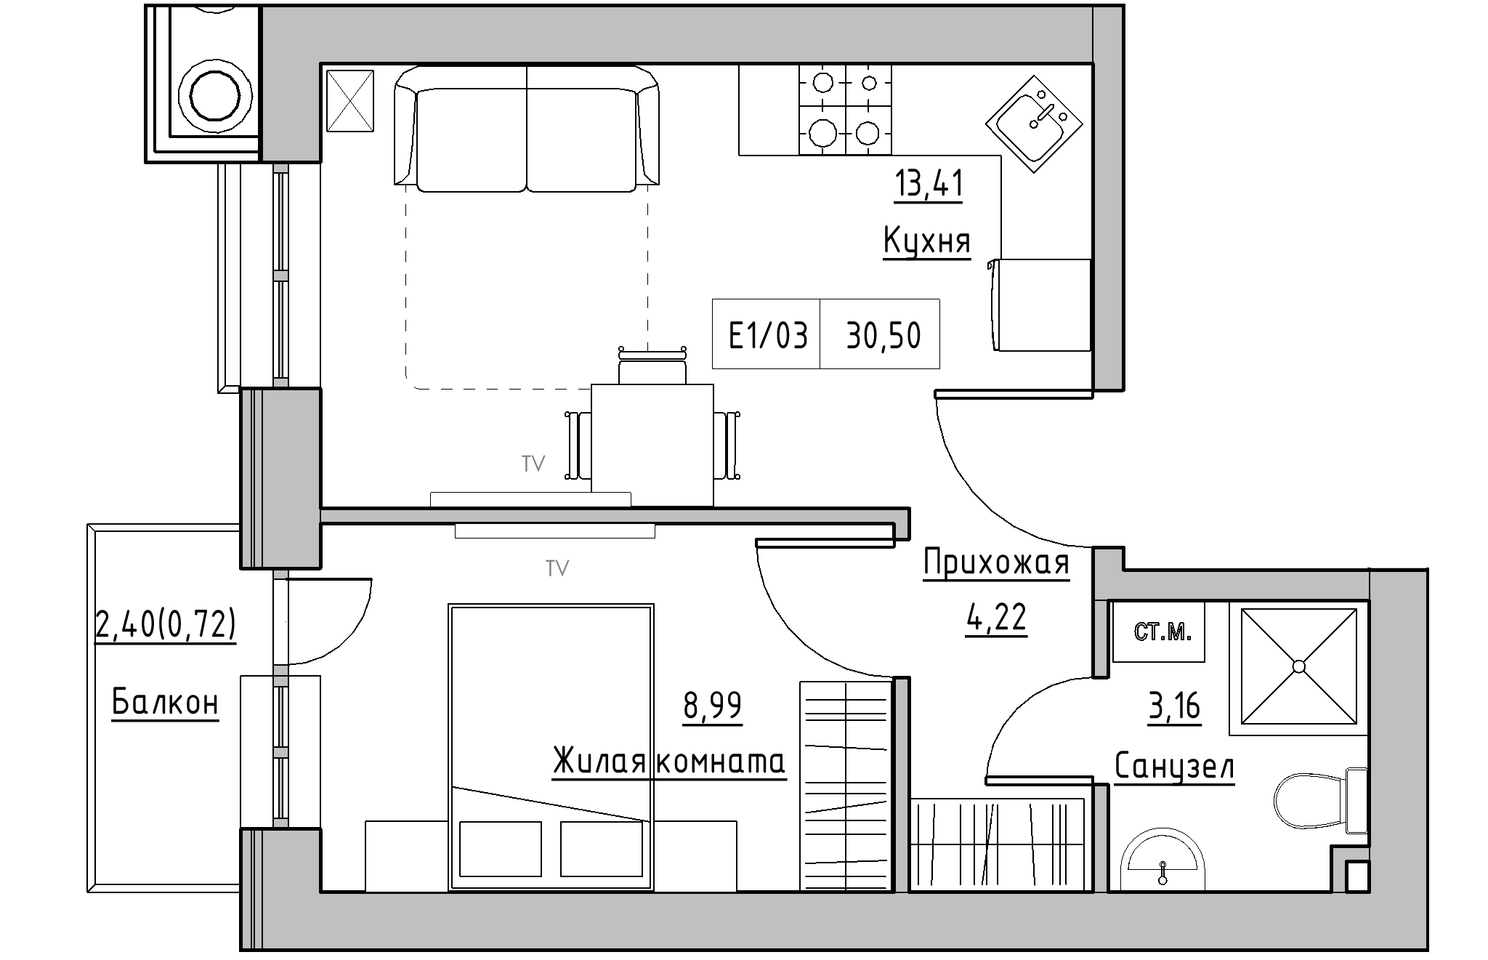 Planning 1-rm flats area 30.5m2, KS-010-04/0012.